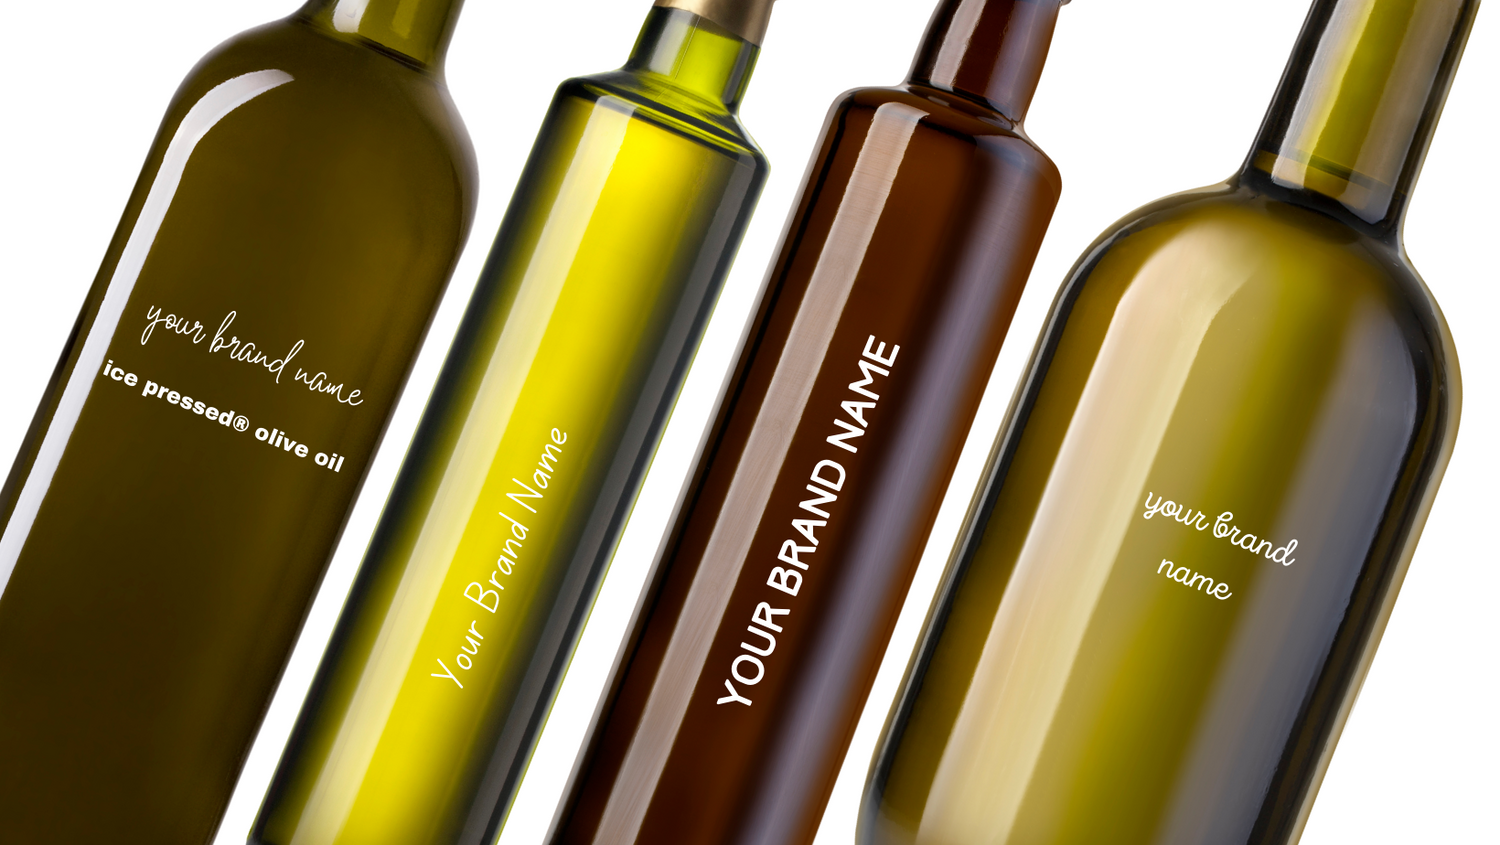 Private label, white label olive oil, private label olive oil, wedding, customer gifts, rallis olive oil, ice pressed olive oil